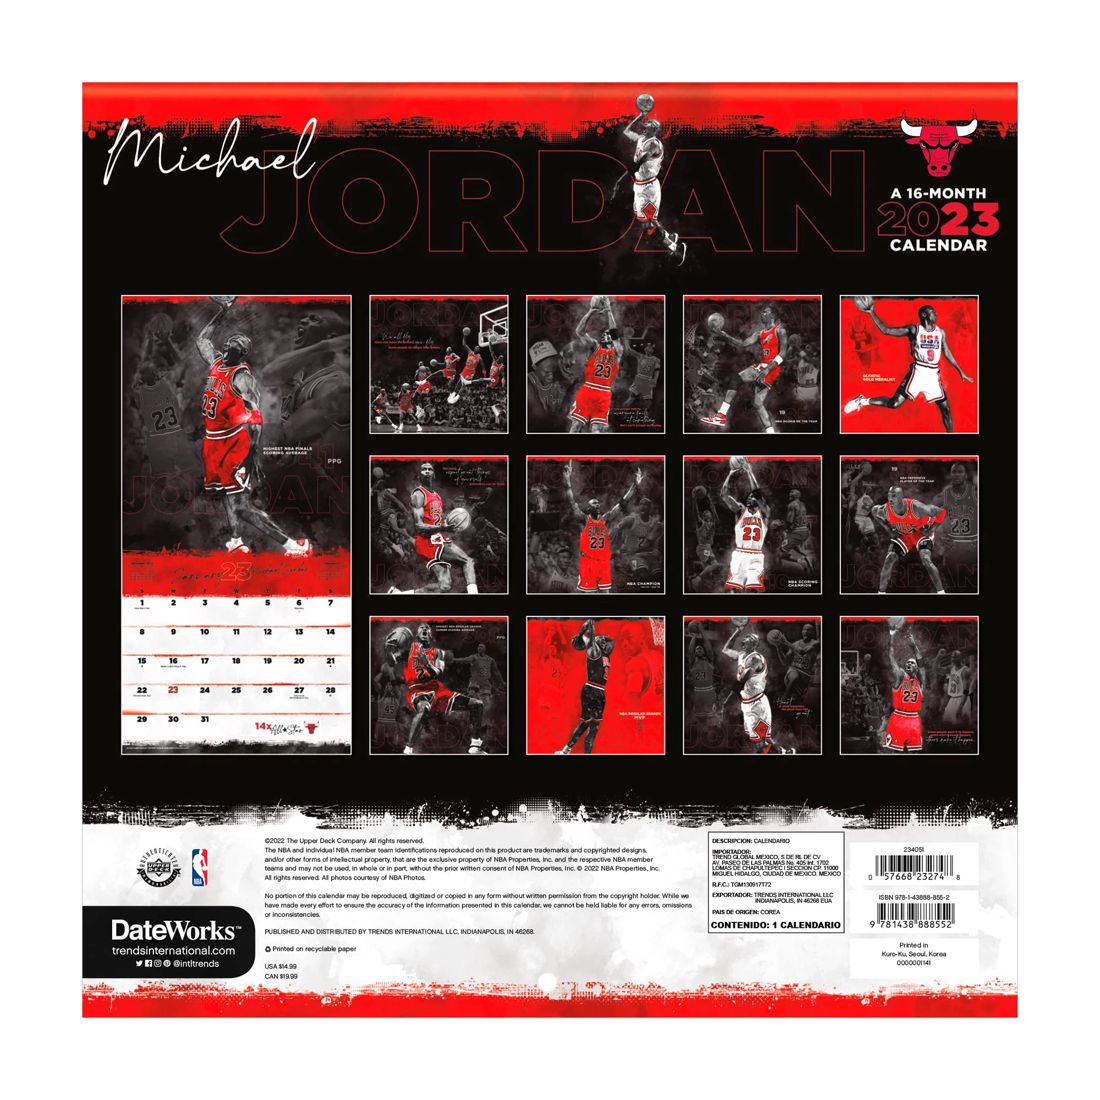 Michael Jordan (Official Licensed) 2023 Square Calendar Target Australia